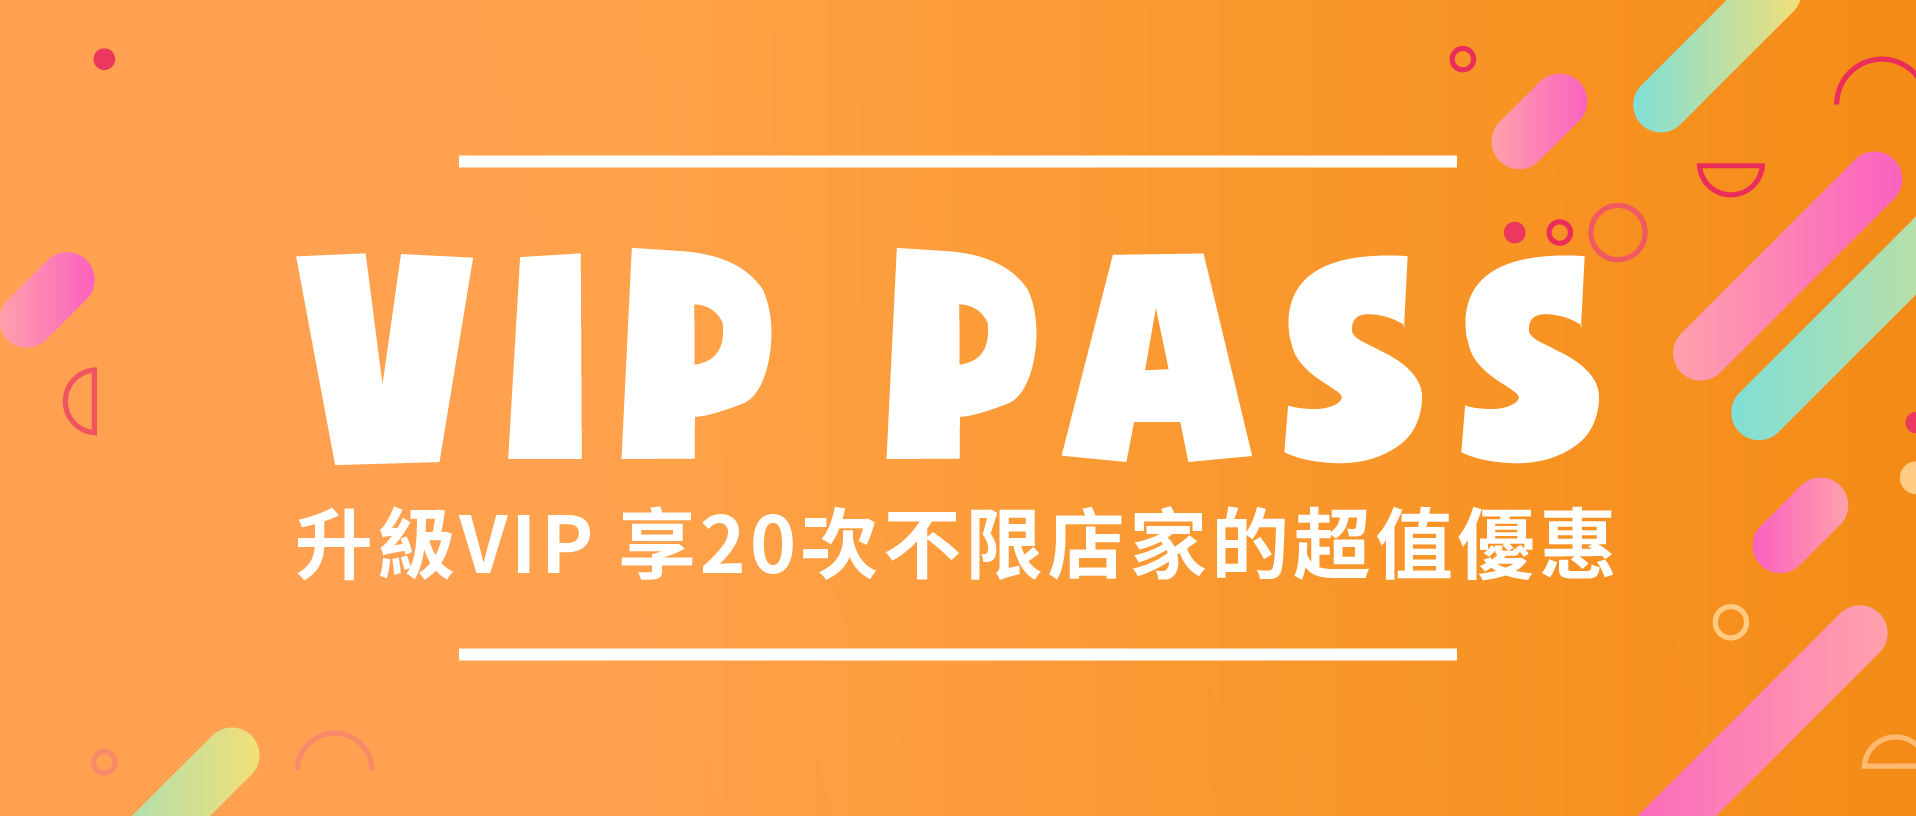 PayBonus×ESG時段折扣平台-VIP PASS